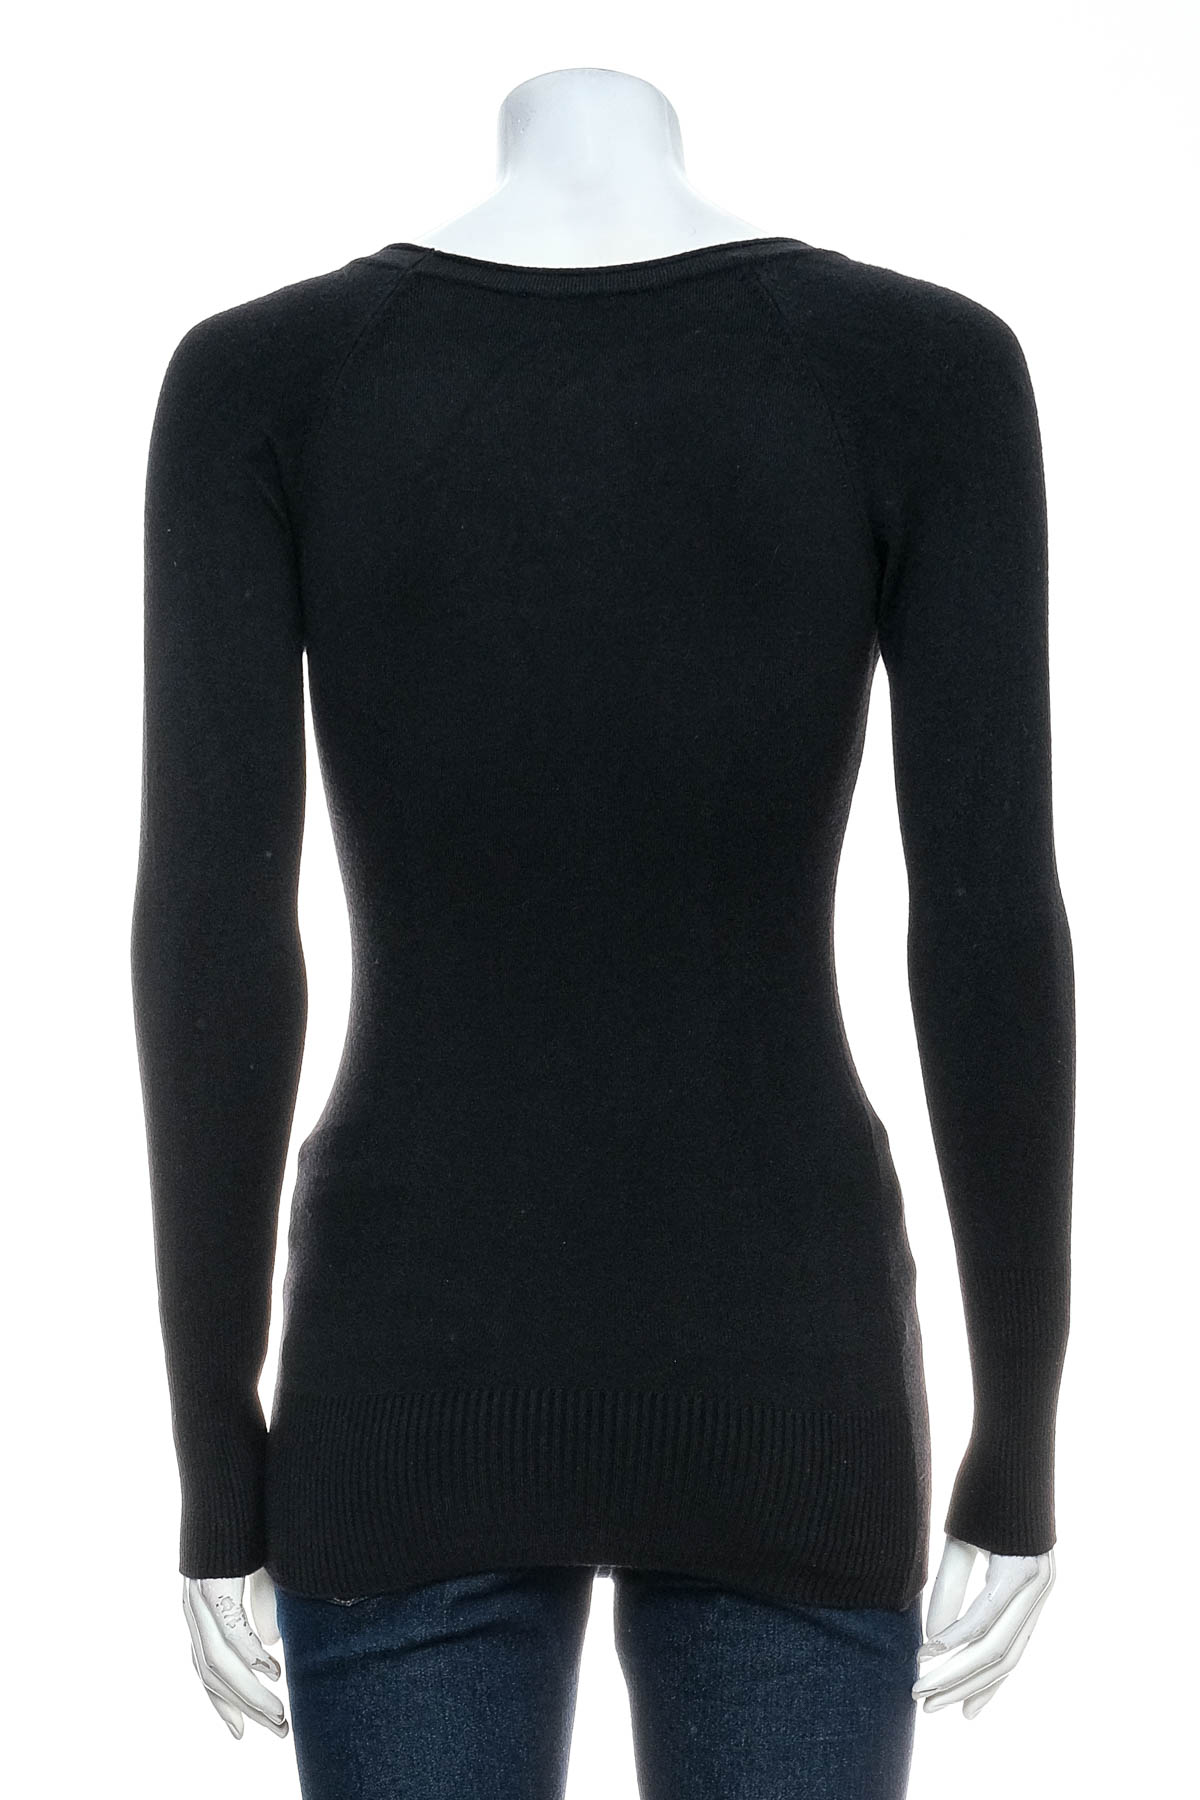 Women's sweater - SusyMix - 1